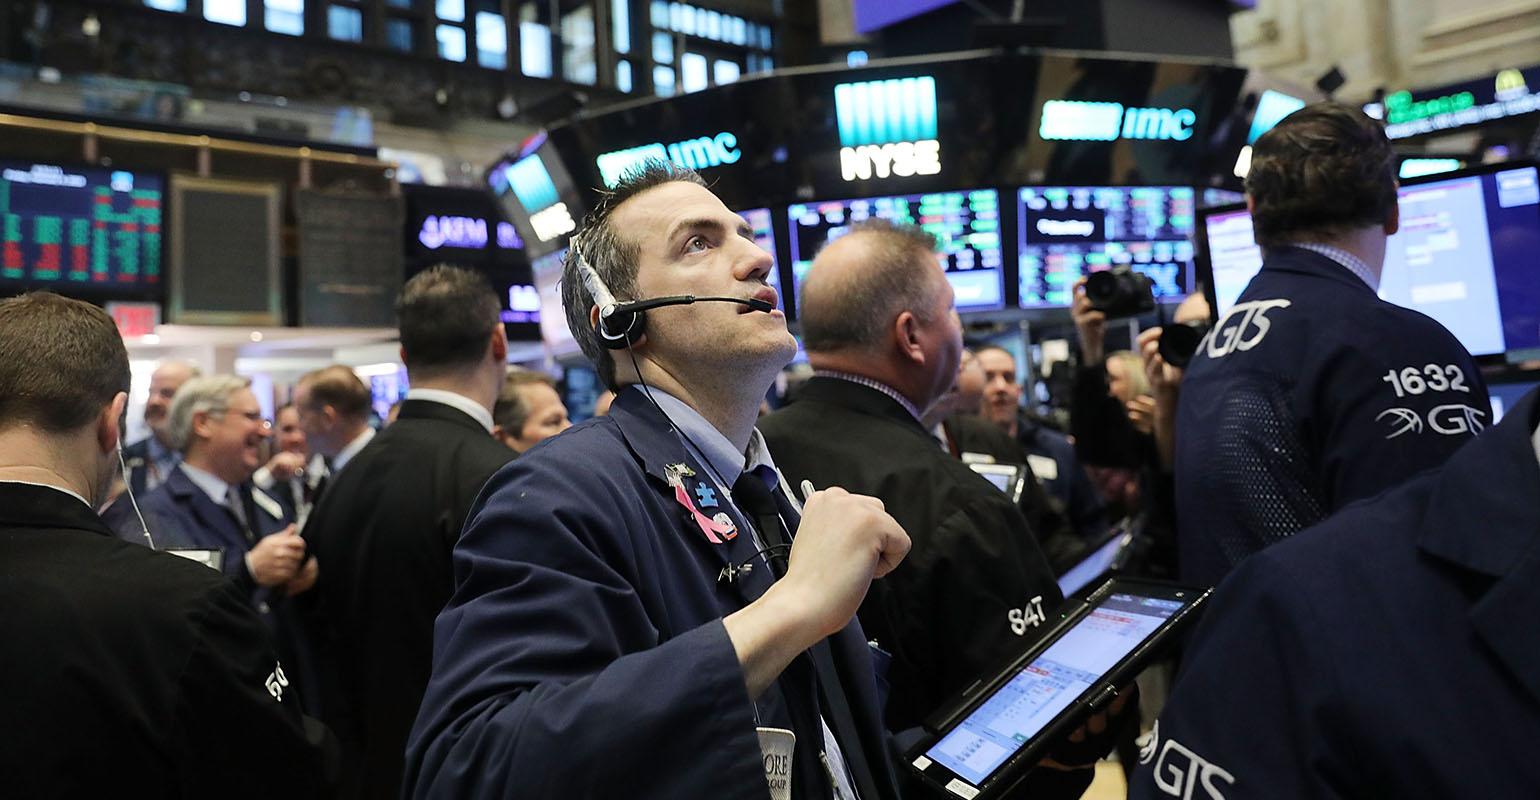 Wall Street’s Sleepy Trading Floors Get the Jolt They’ve Needed